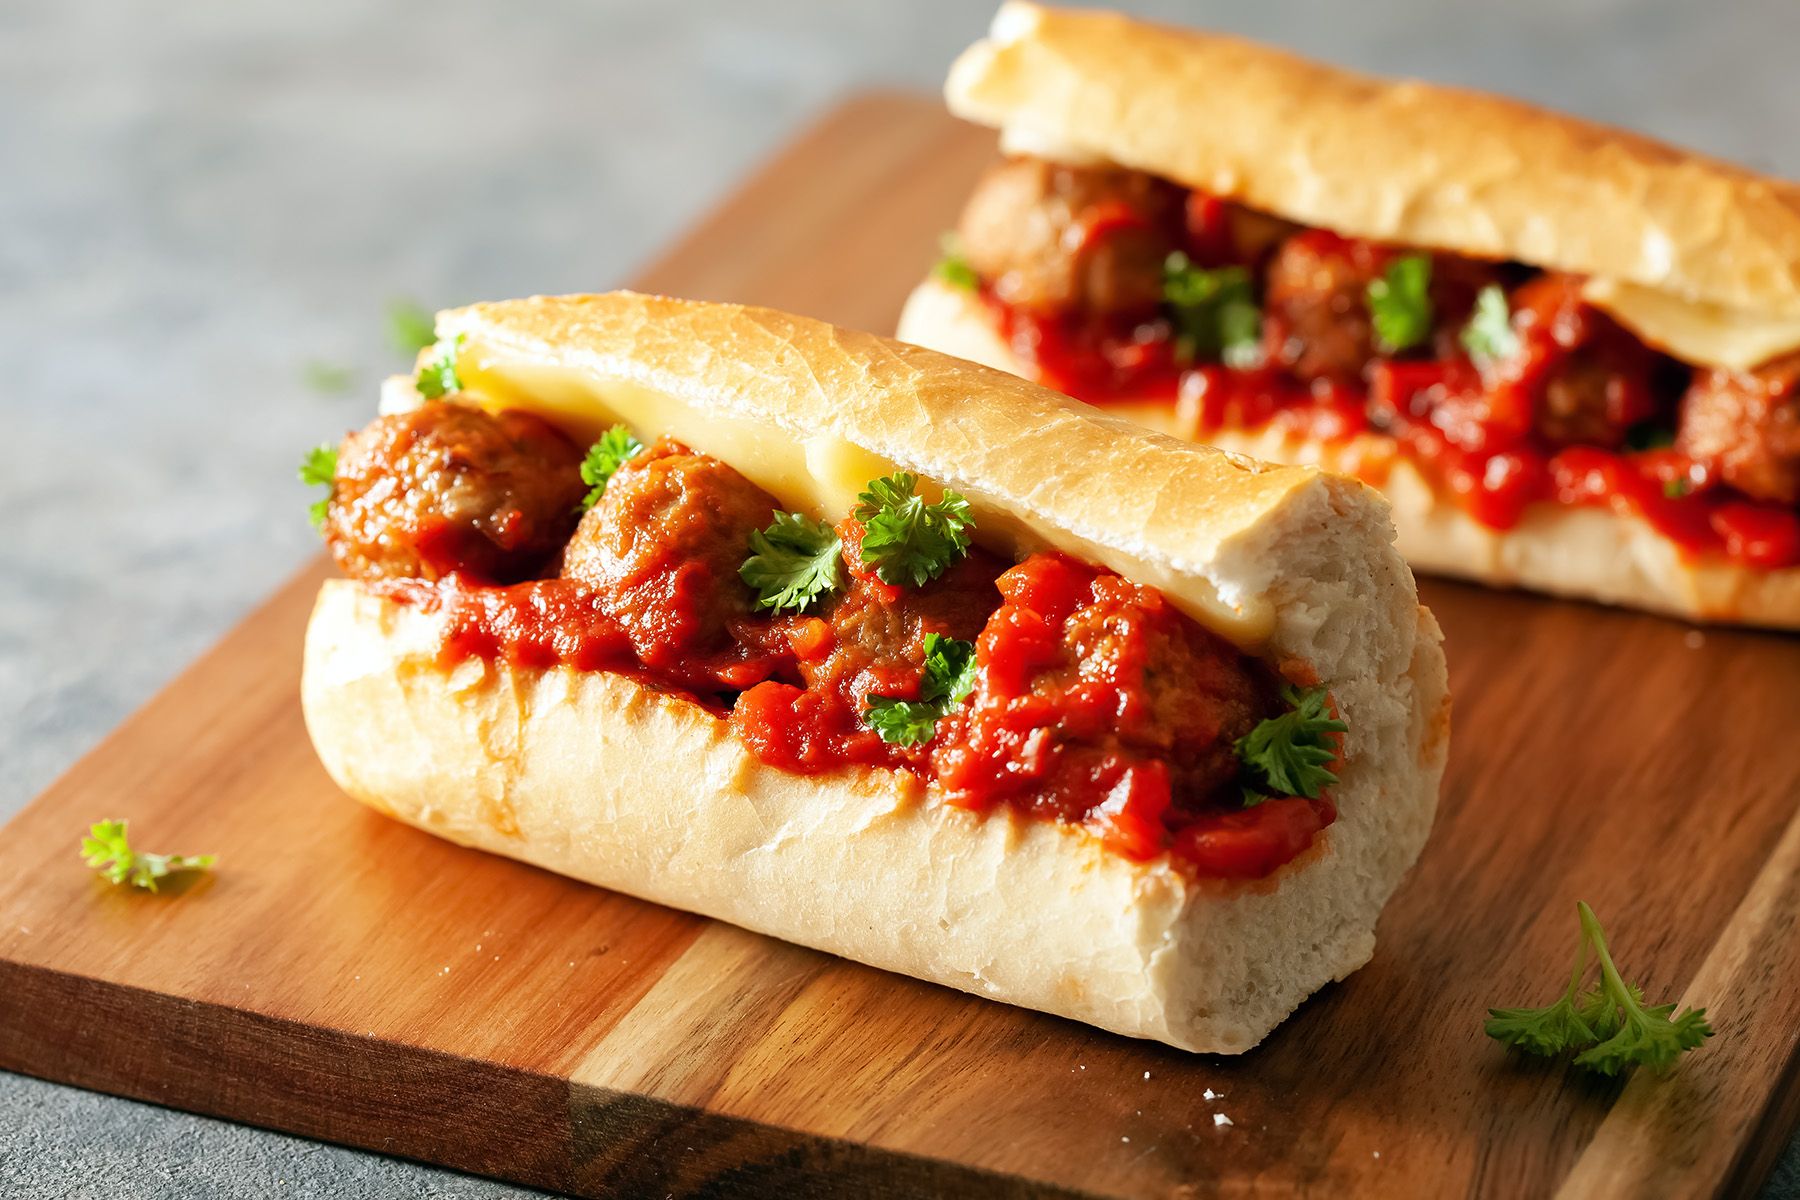 A meatball sub sandwich is strikingly similar to the hot dog sandwich